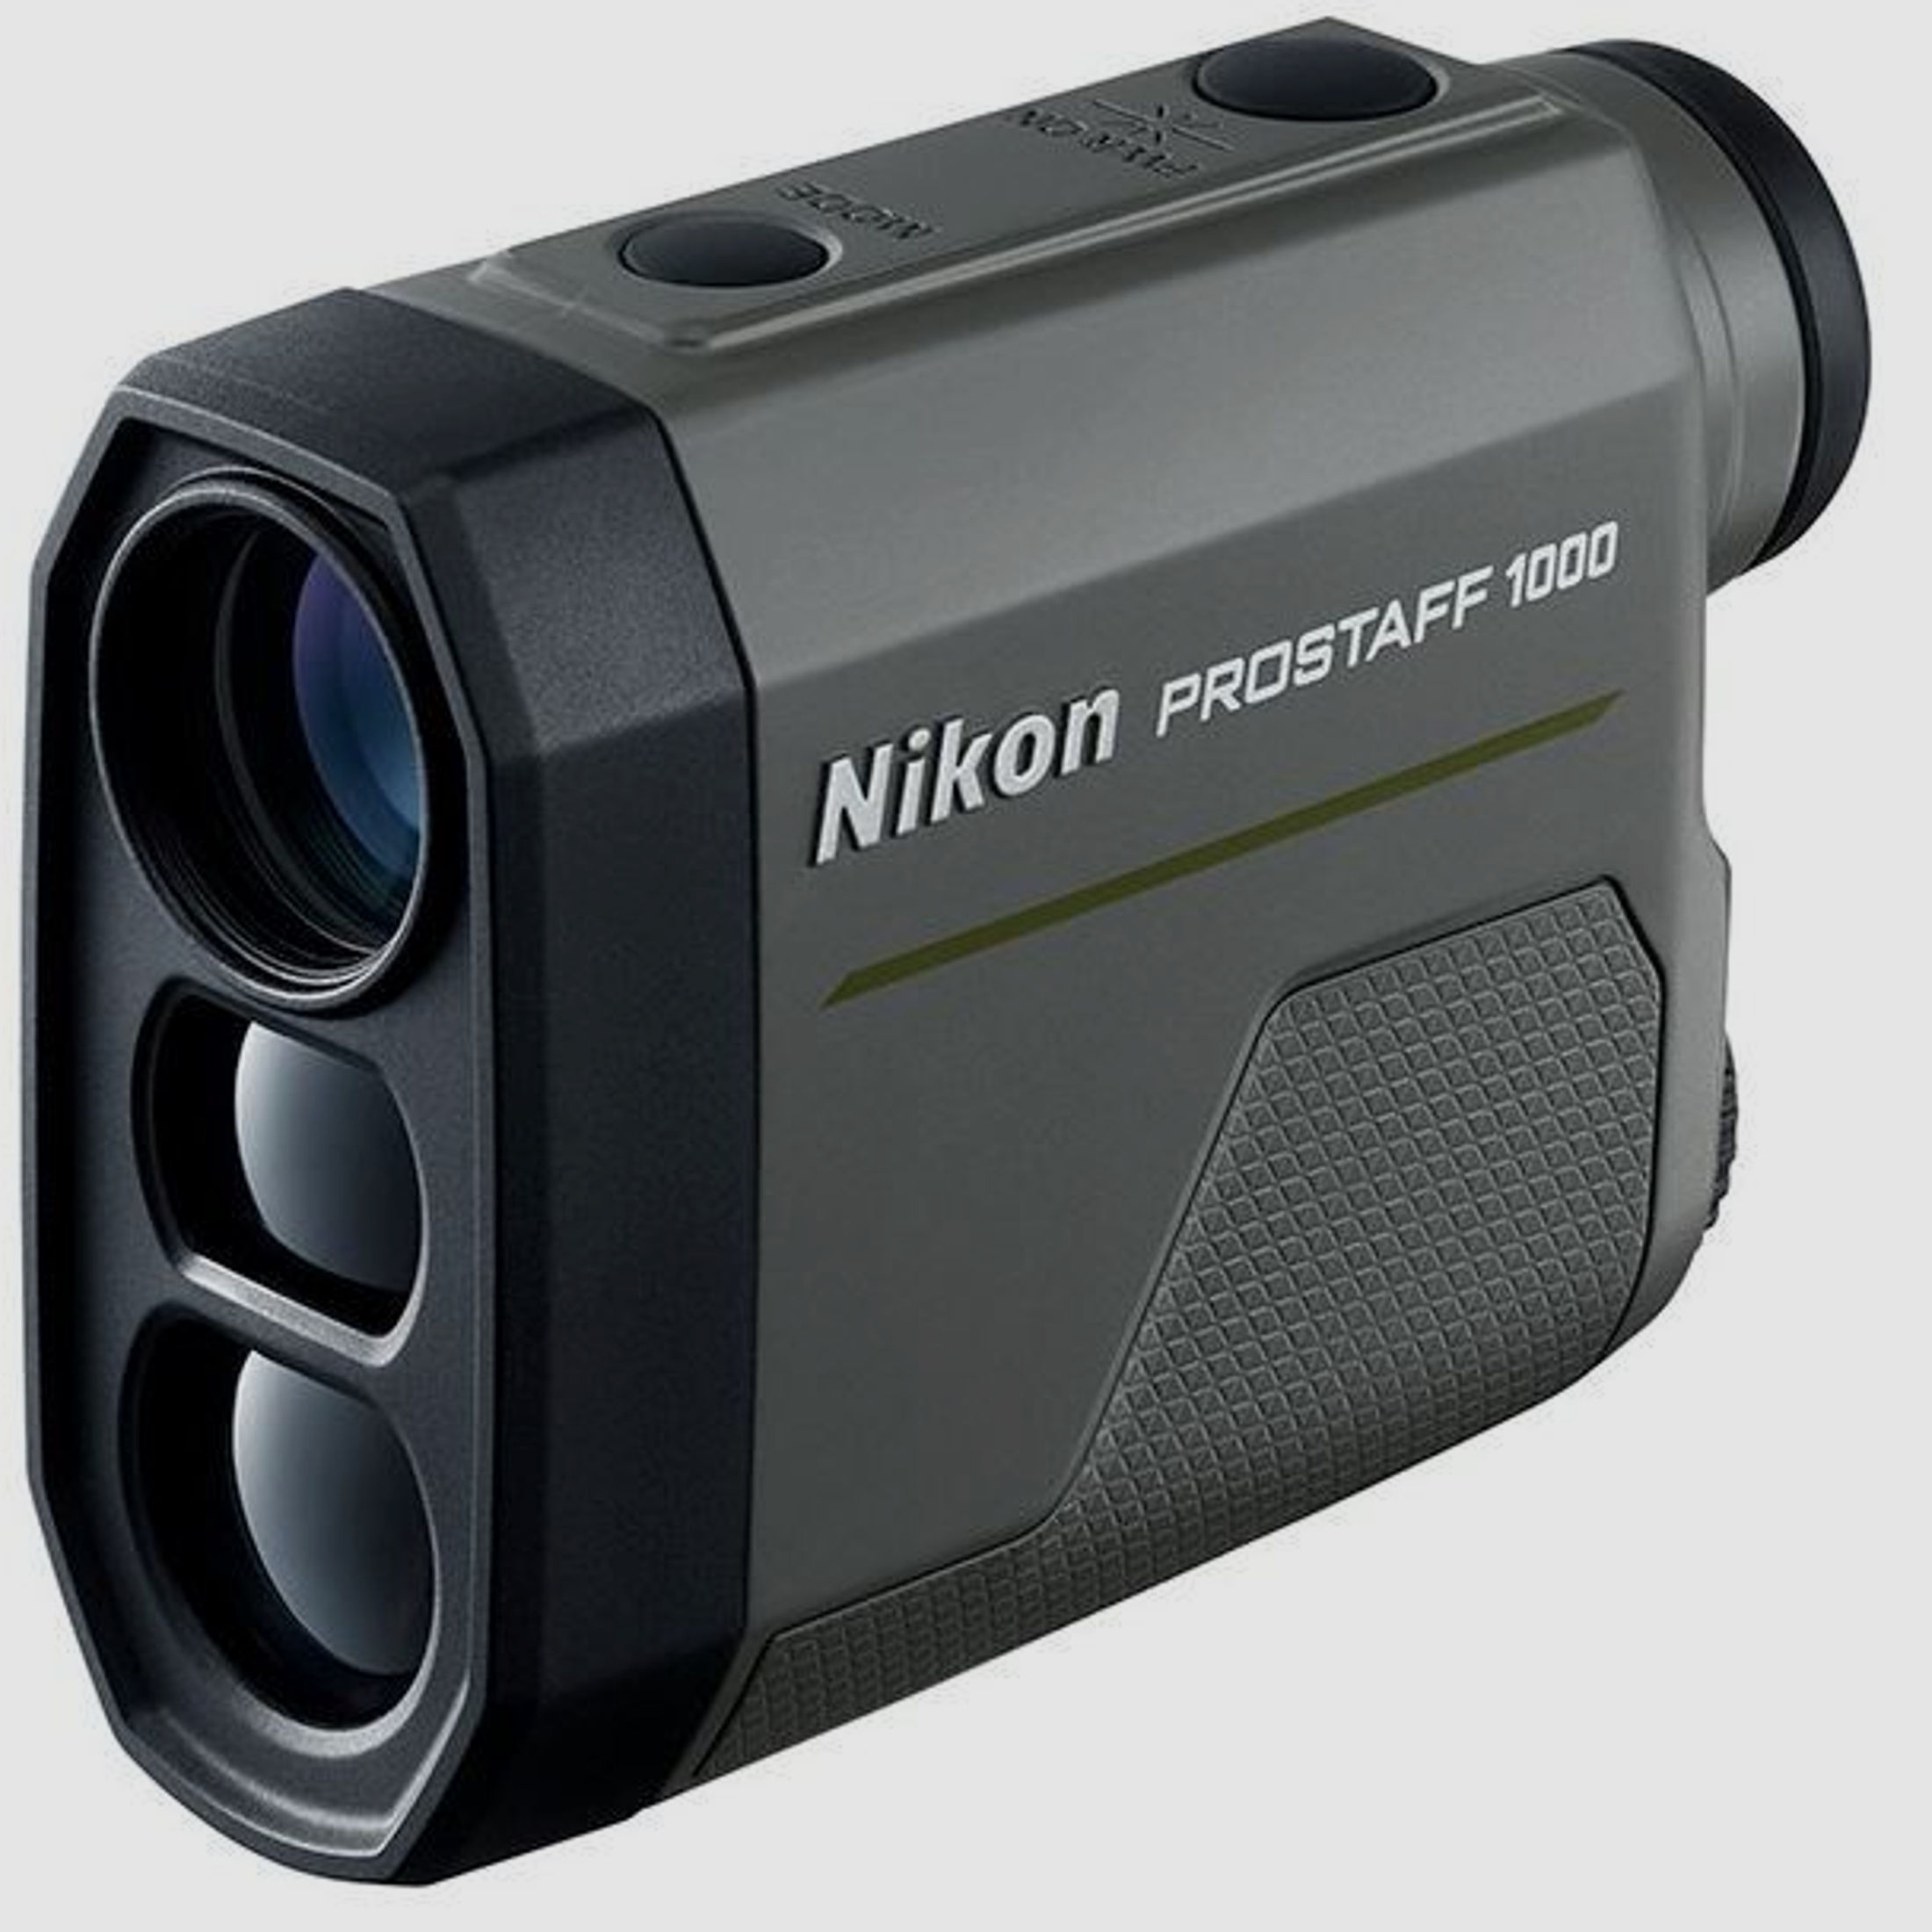 Nikon Nikon Laser Entfernungsmesser PROSTAFF 1000 -8,45€ 5% Fernglas Rabatt 160,54 Effektivpreis